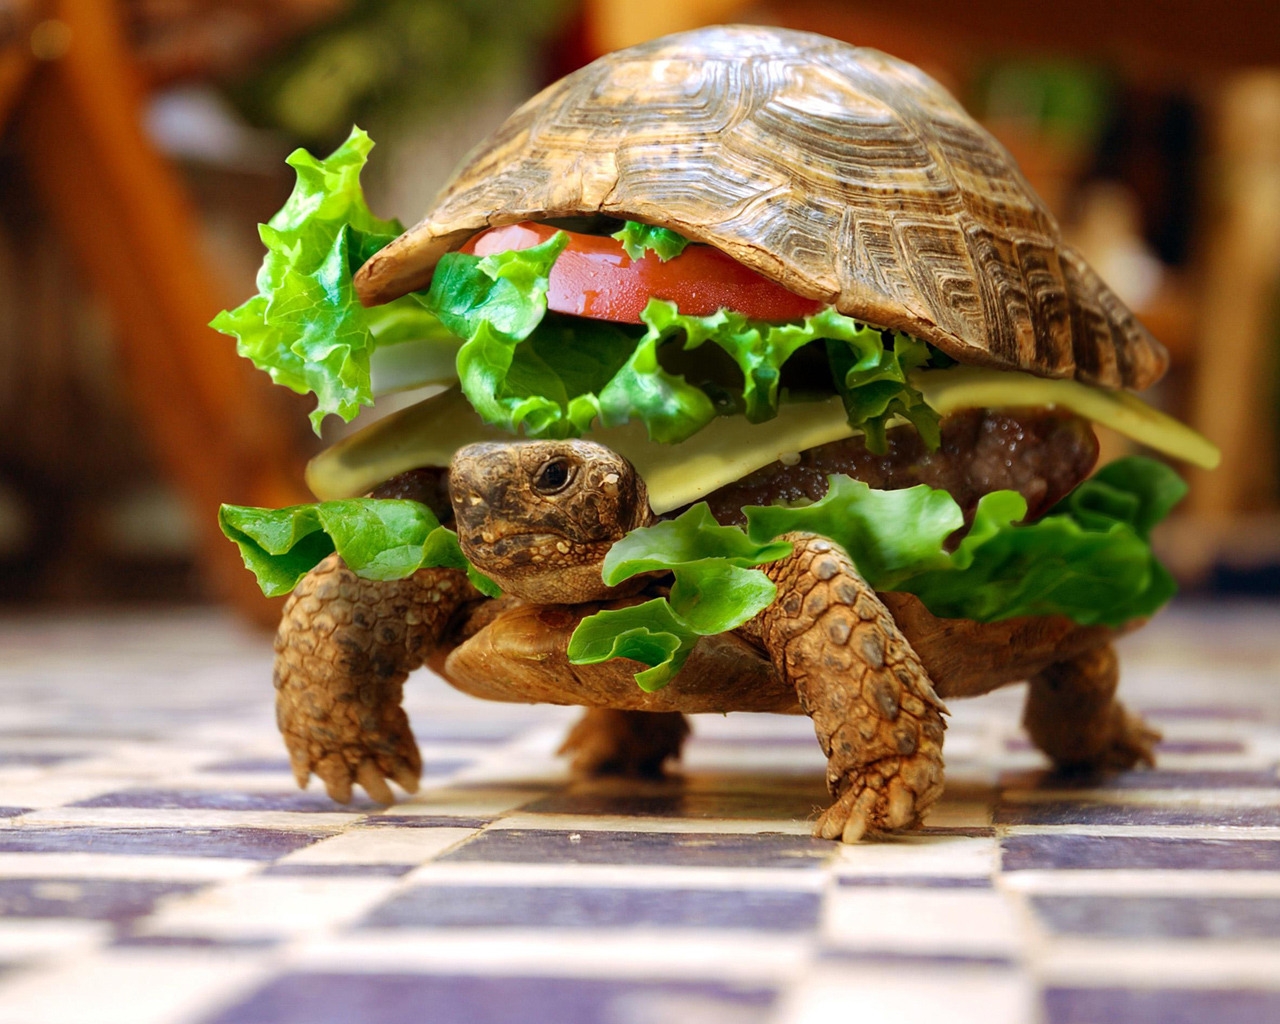 Turtle Hamburger for 1280 x 1024 resolution